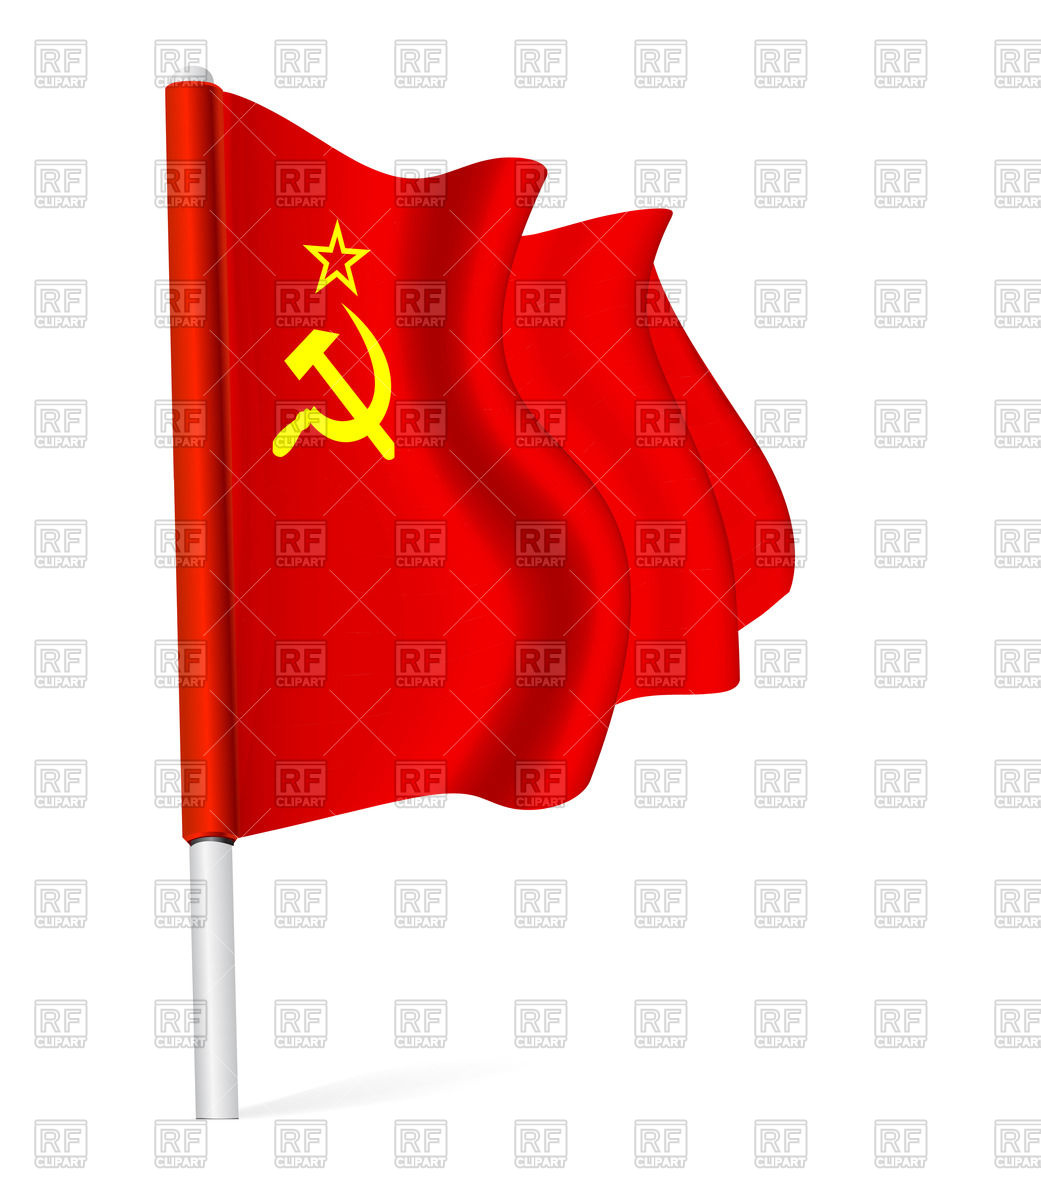 Flag Of United Soviet Socialist Republics Backgrounds on Wallpapers Vista